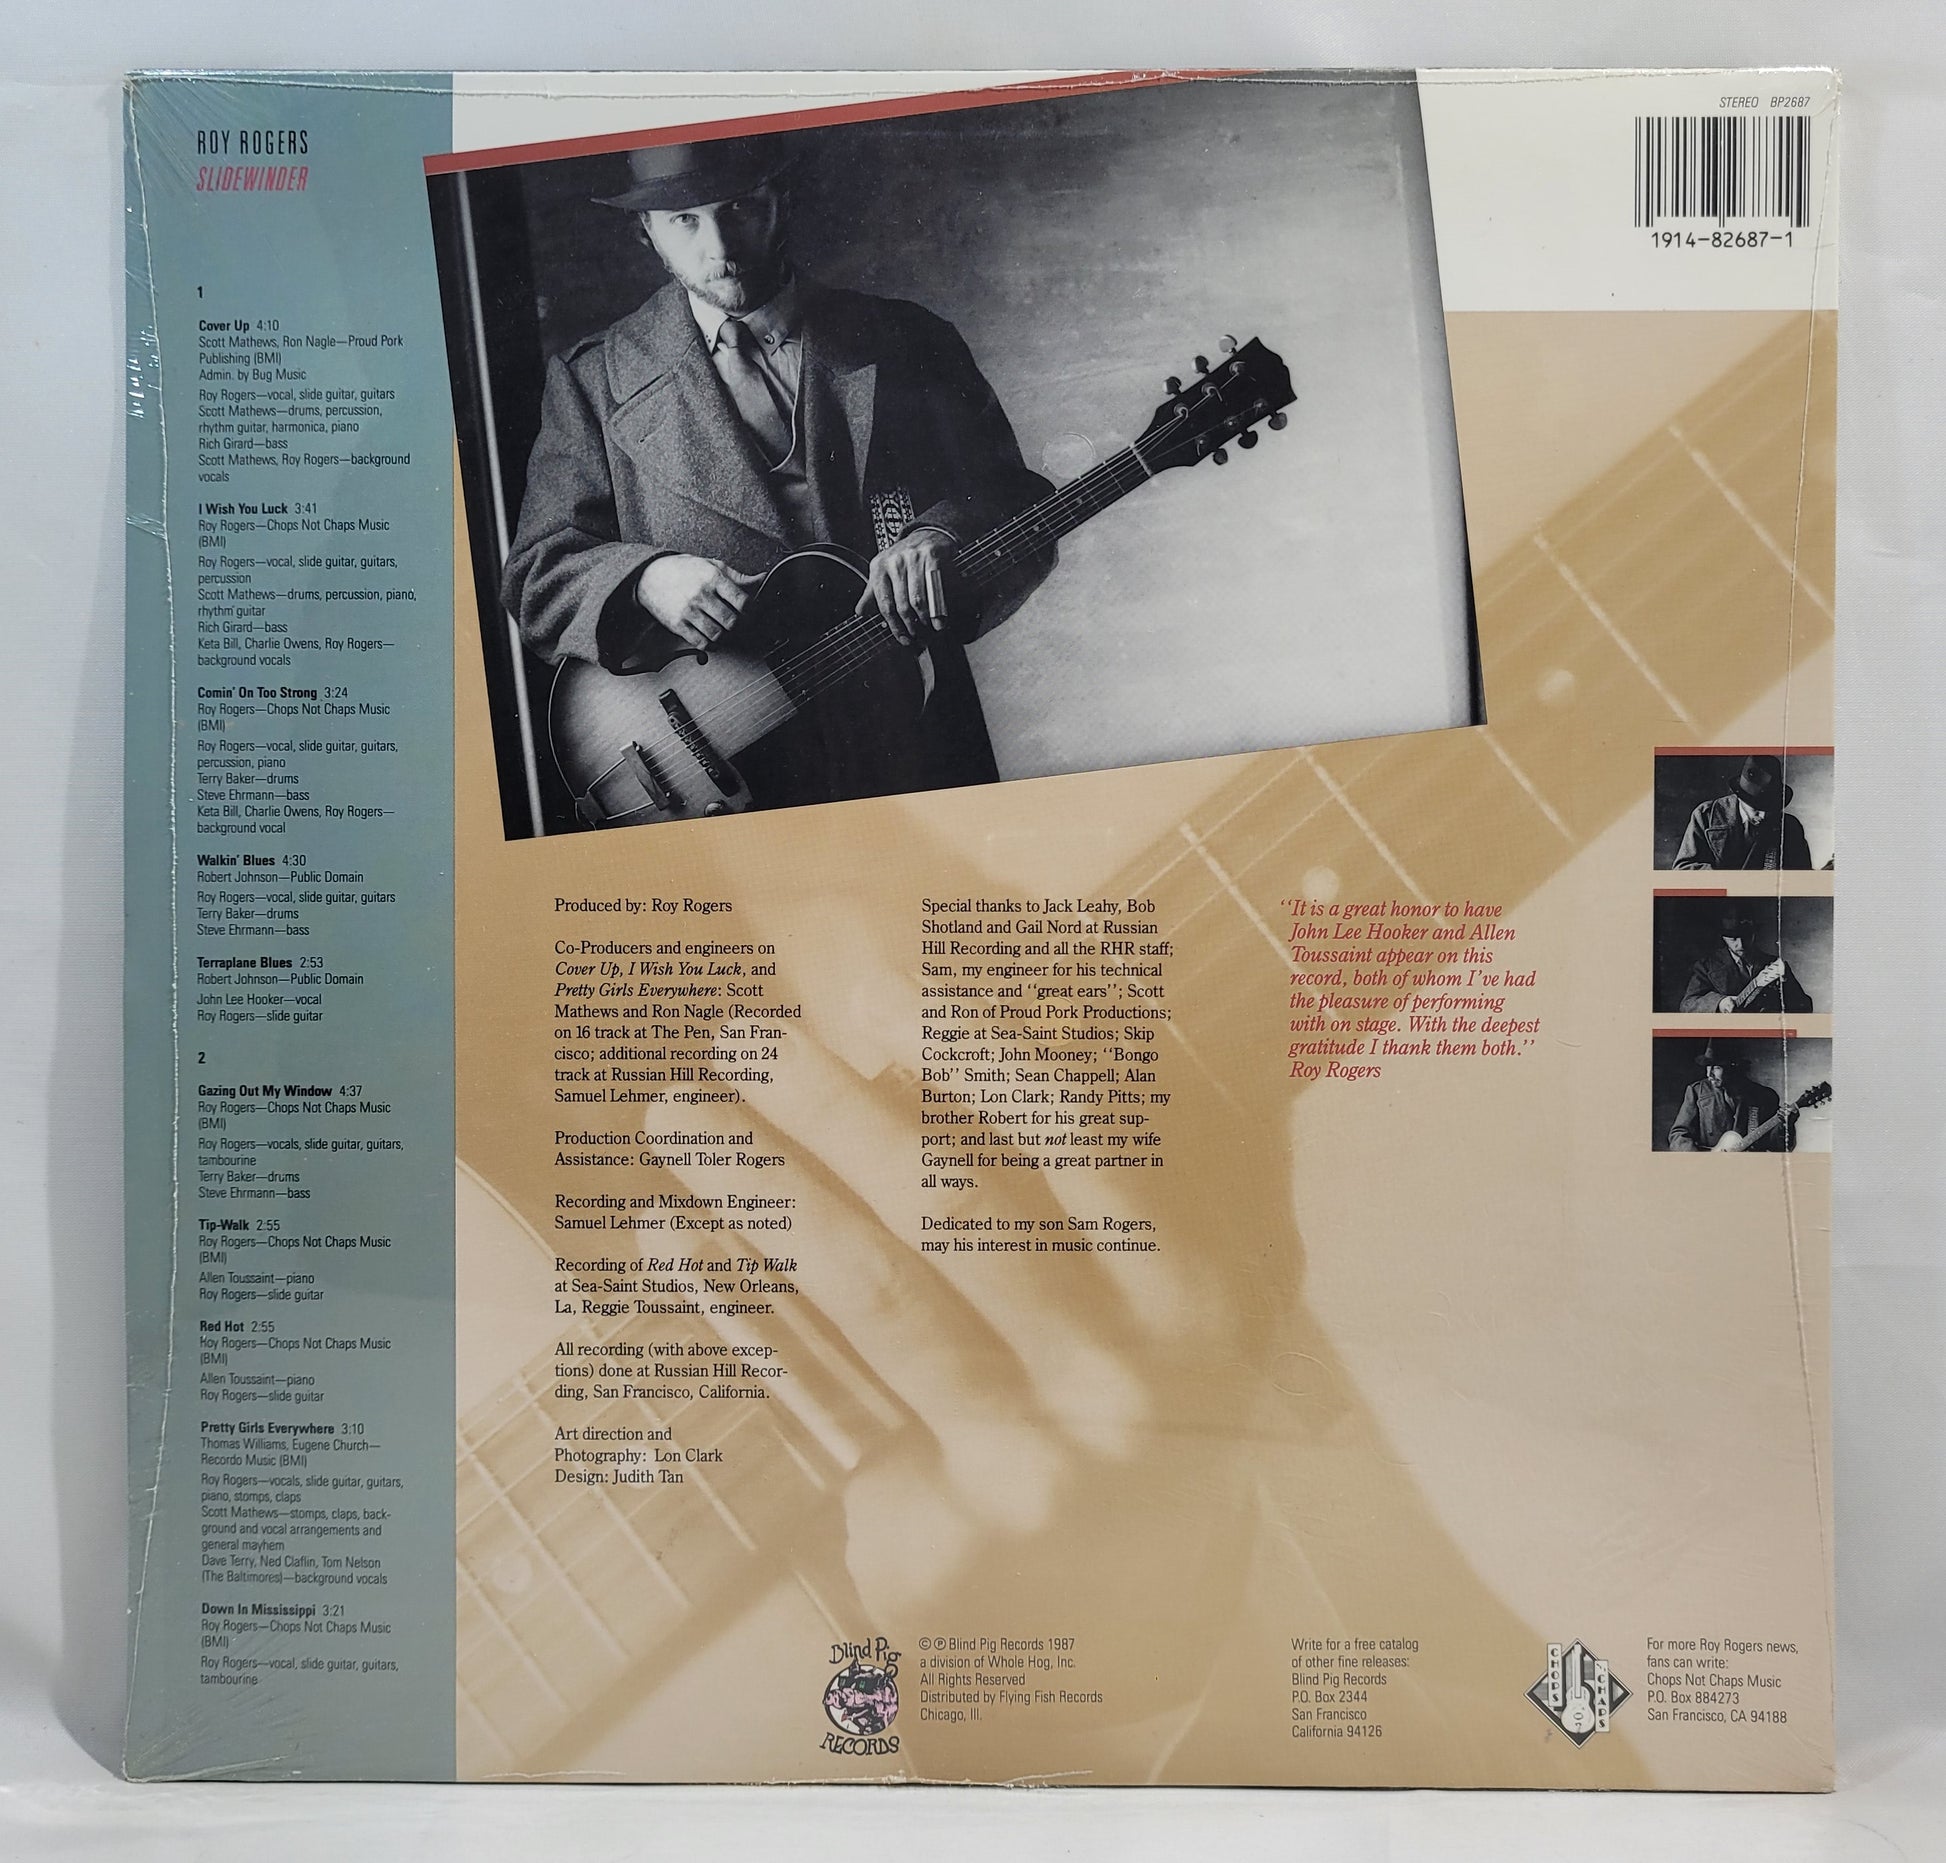 Roy Rogers - Slidewinder [New Vinyl Record LP]